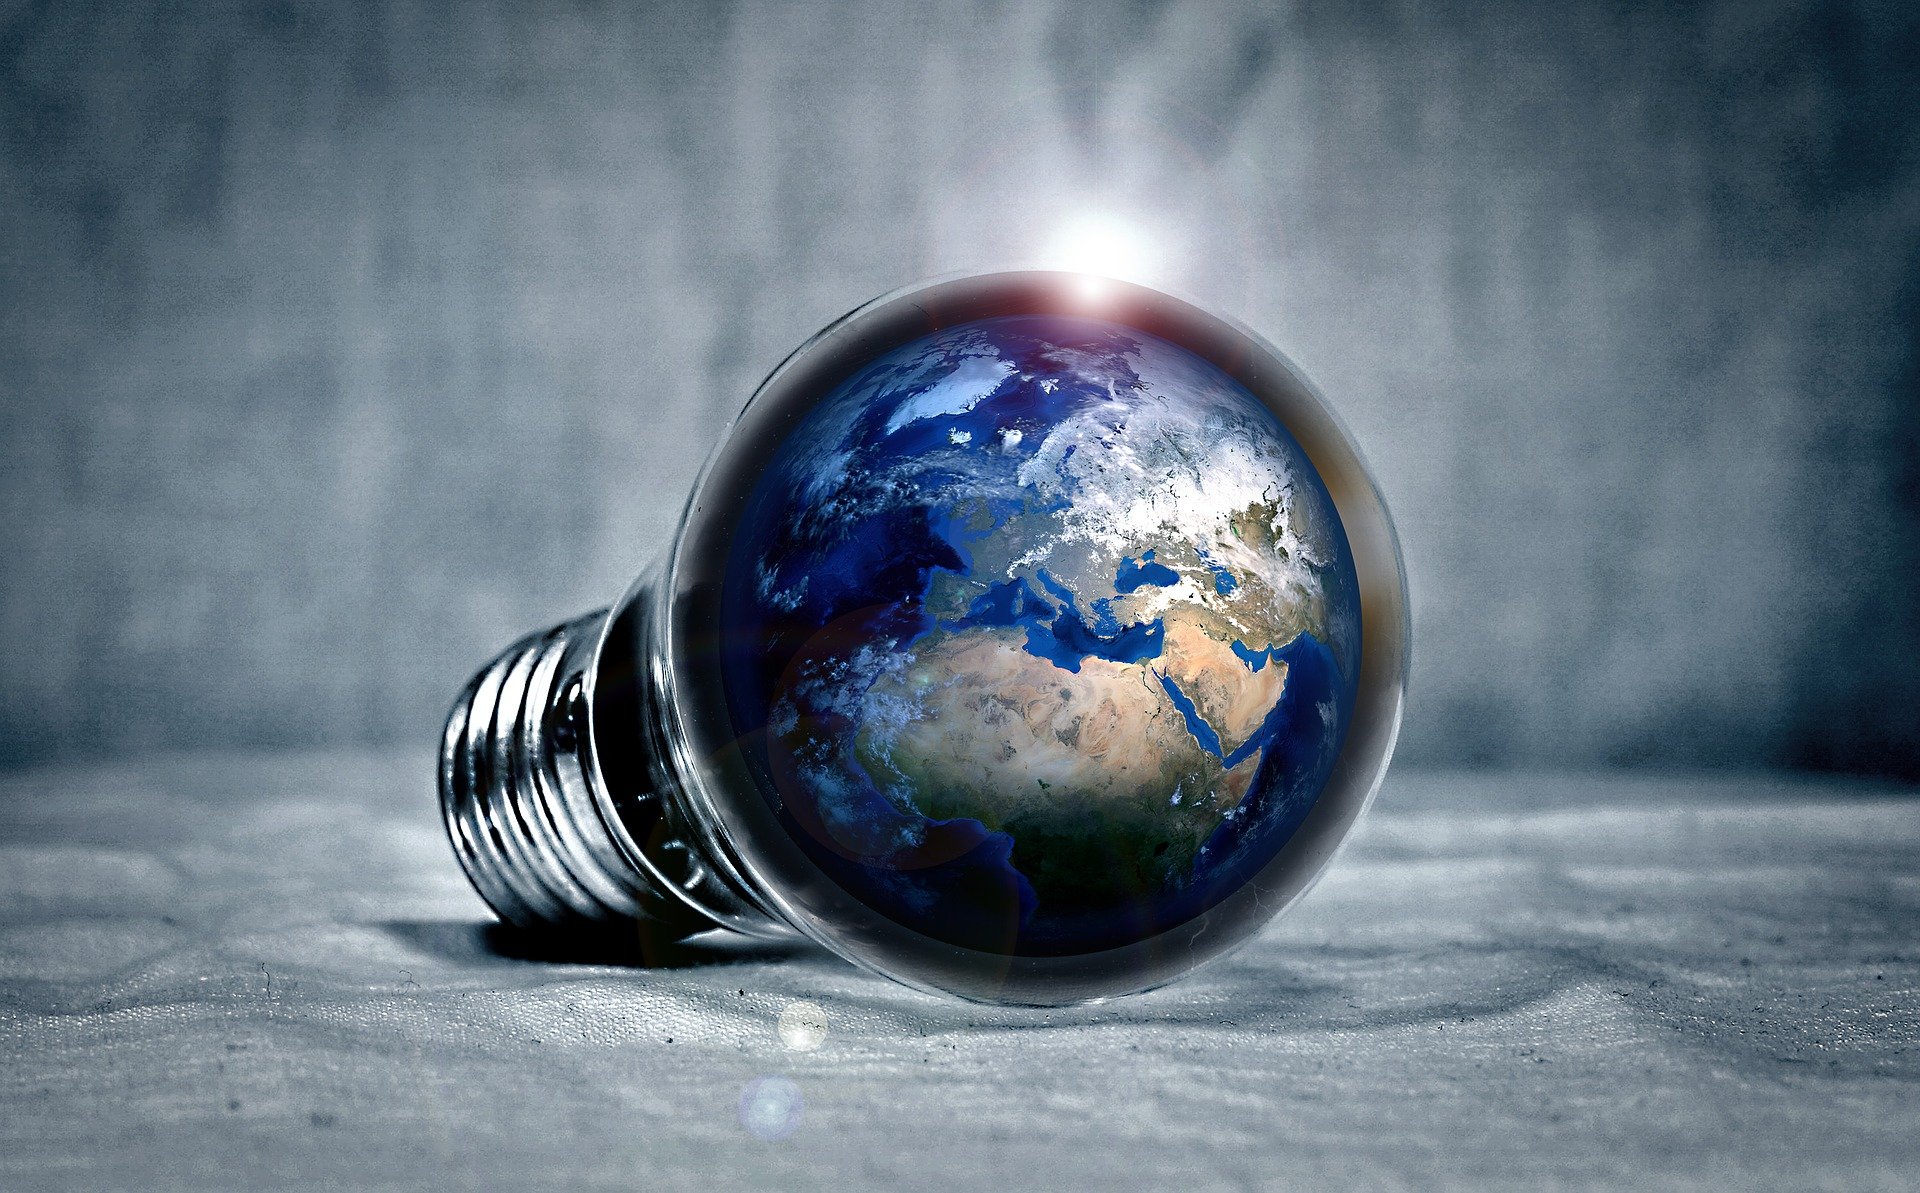 Light Bulb Earth